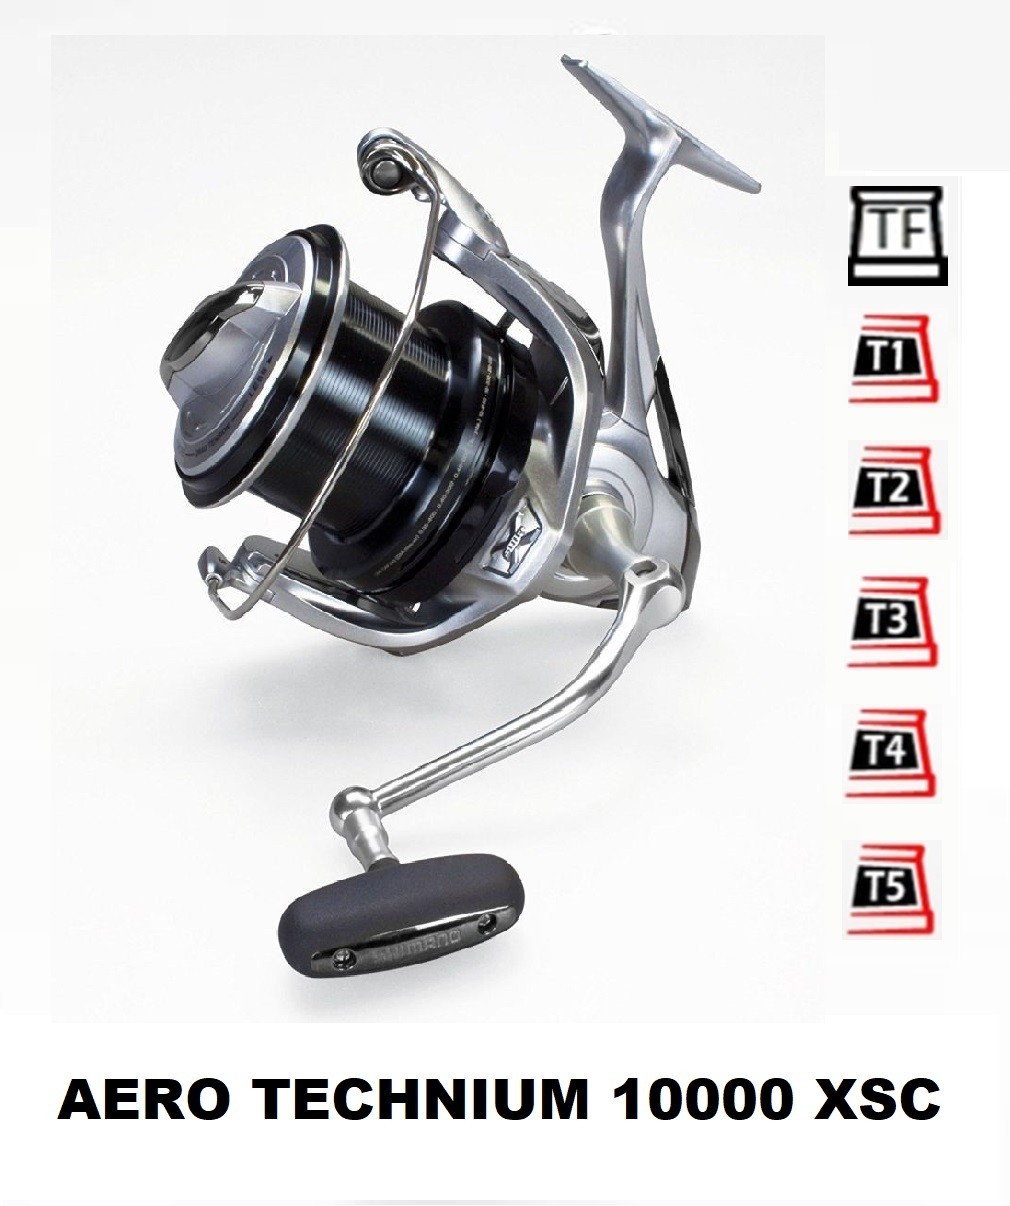 shimano aero technium 10000 xsc